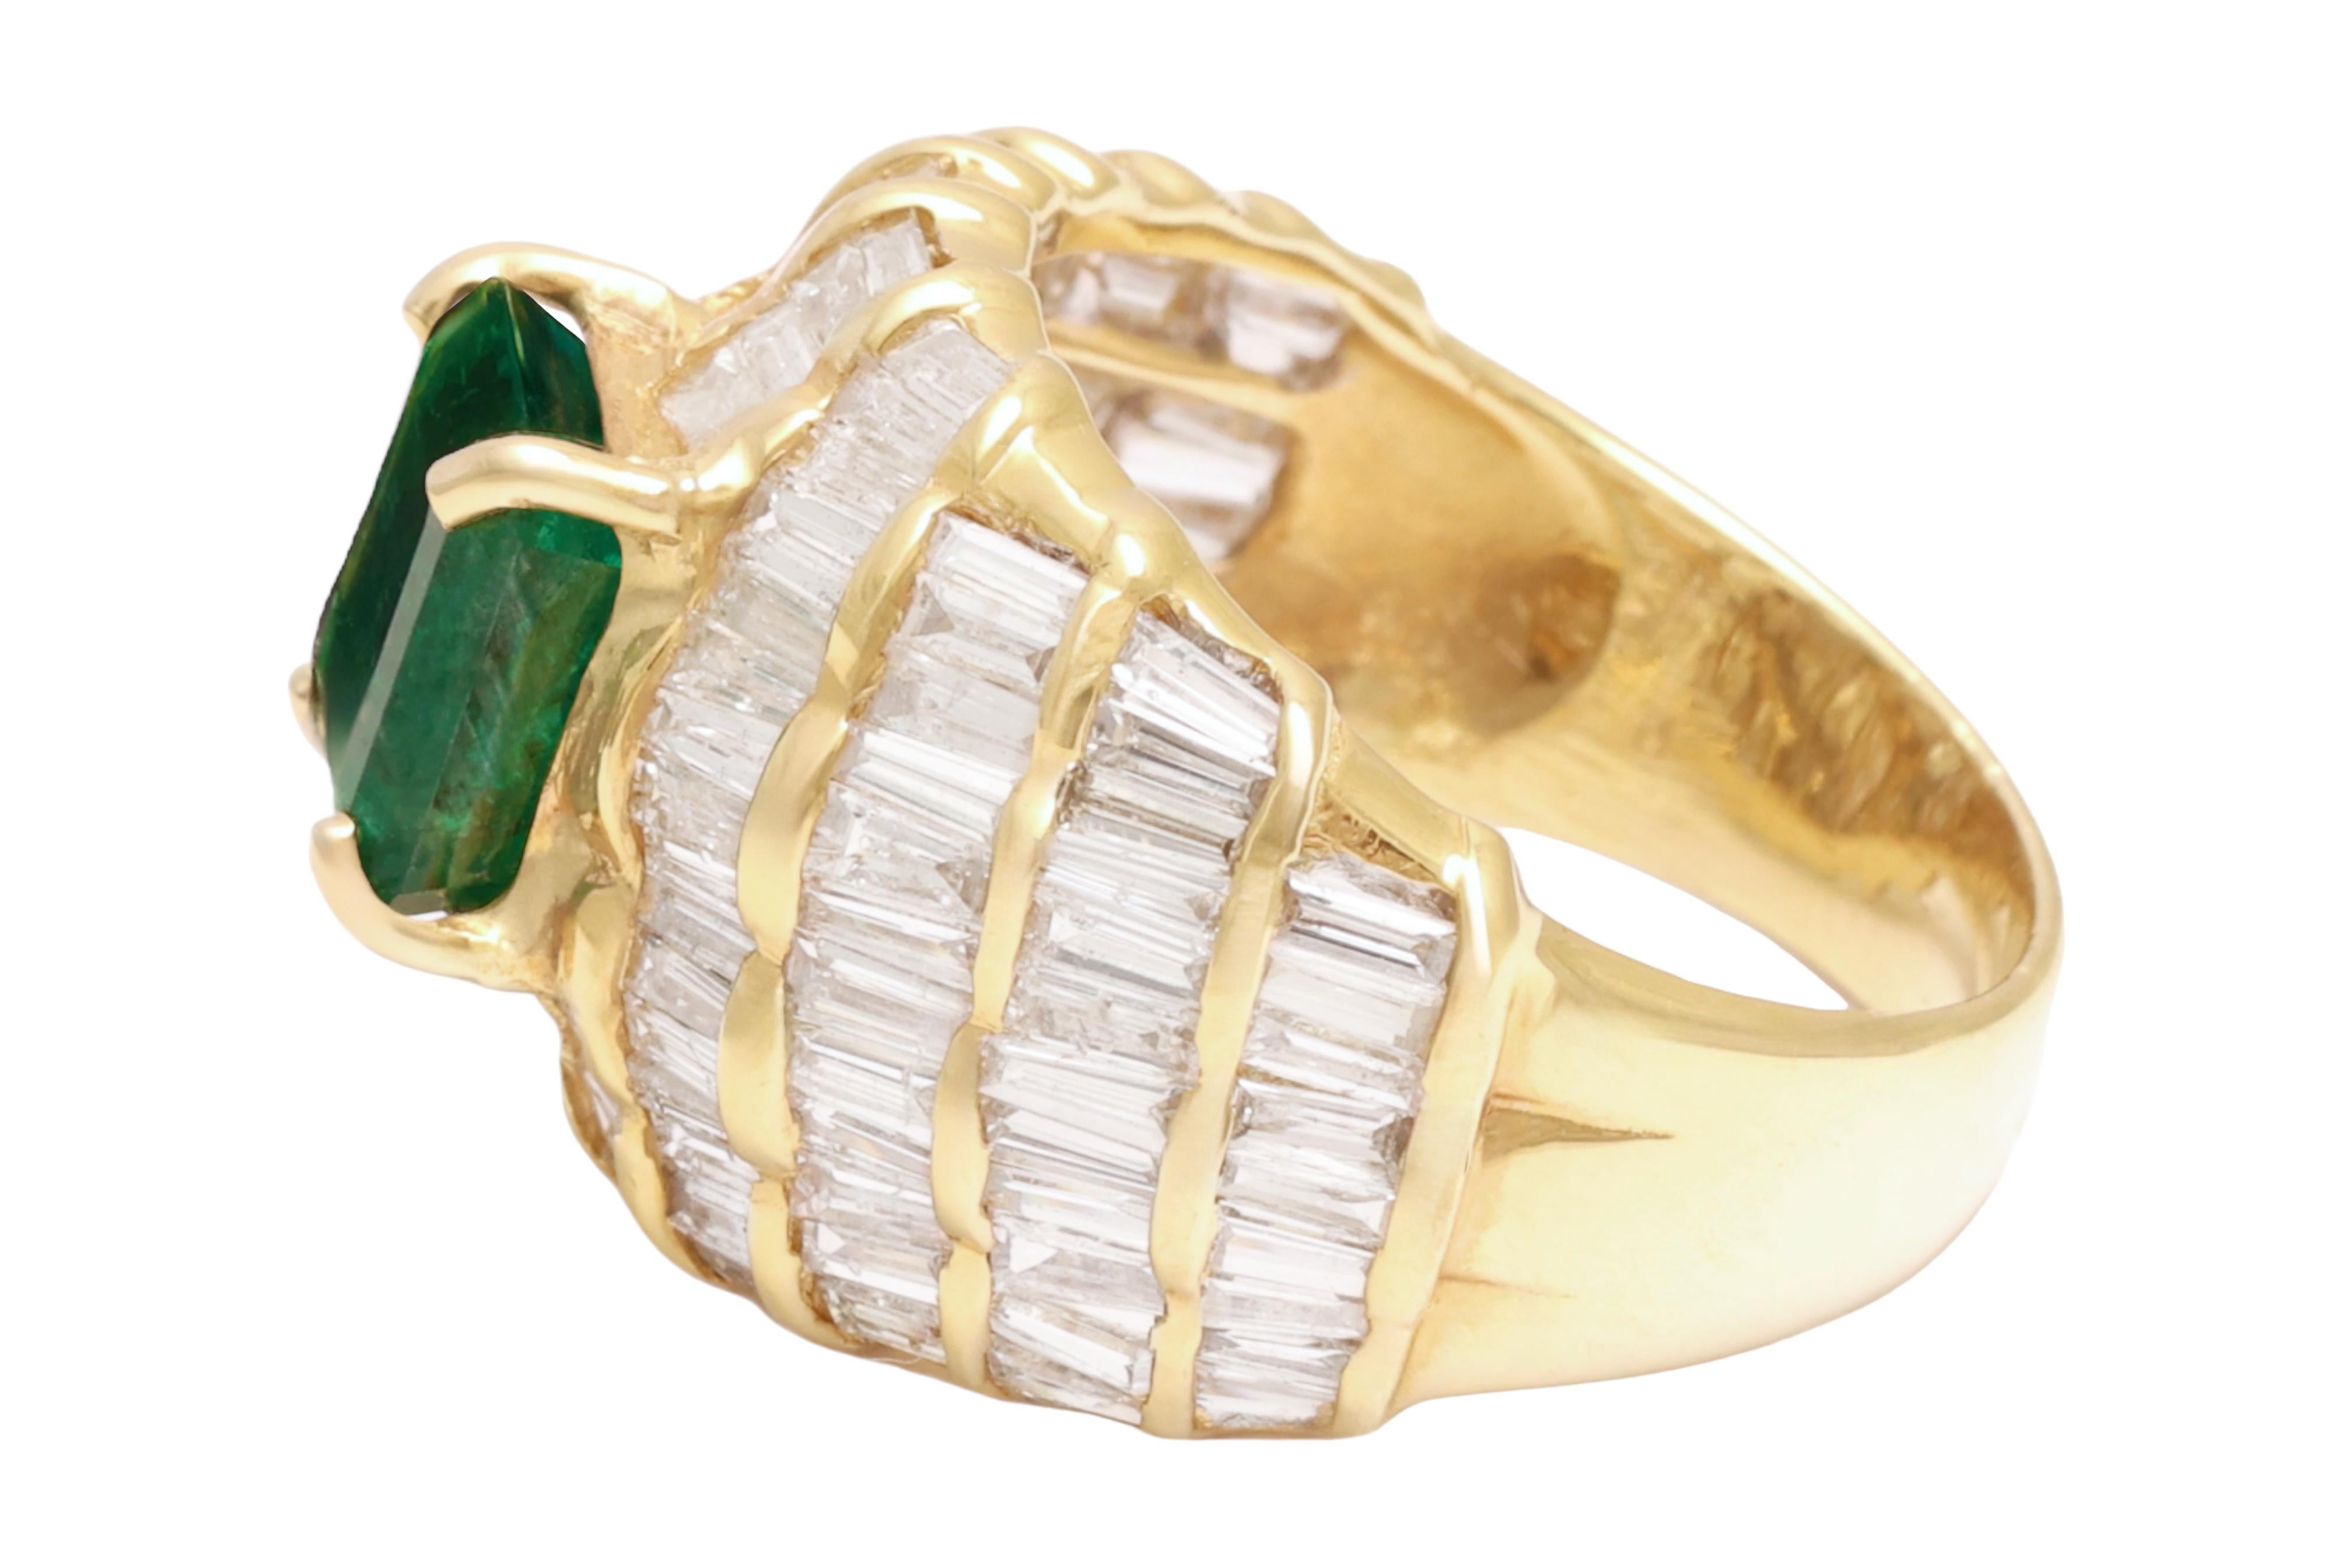 Emerald Cut Carat Gemlab Certified 2.54 Carat Emerald Dome Ring with Baguette Diamonds For Sale